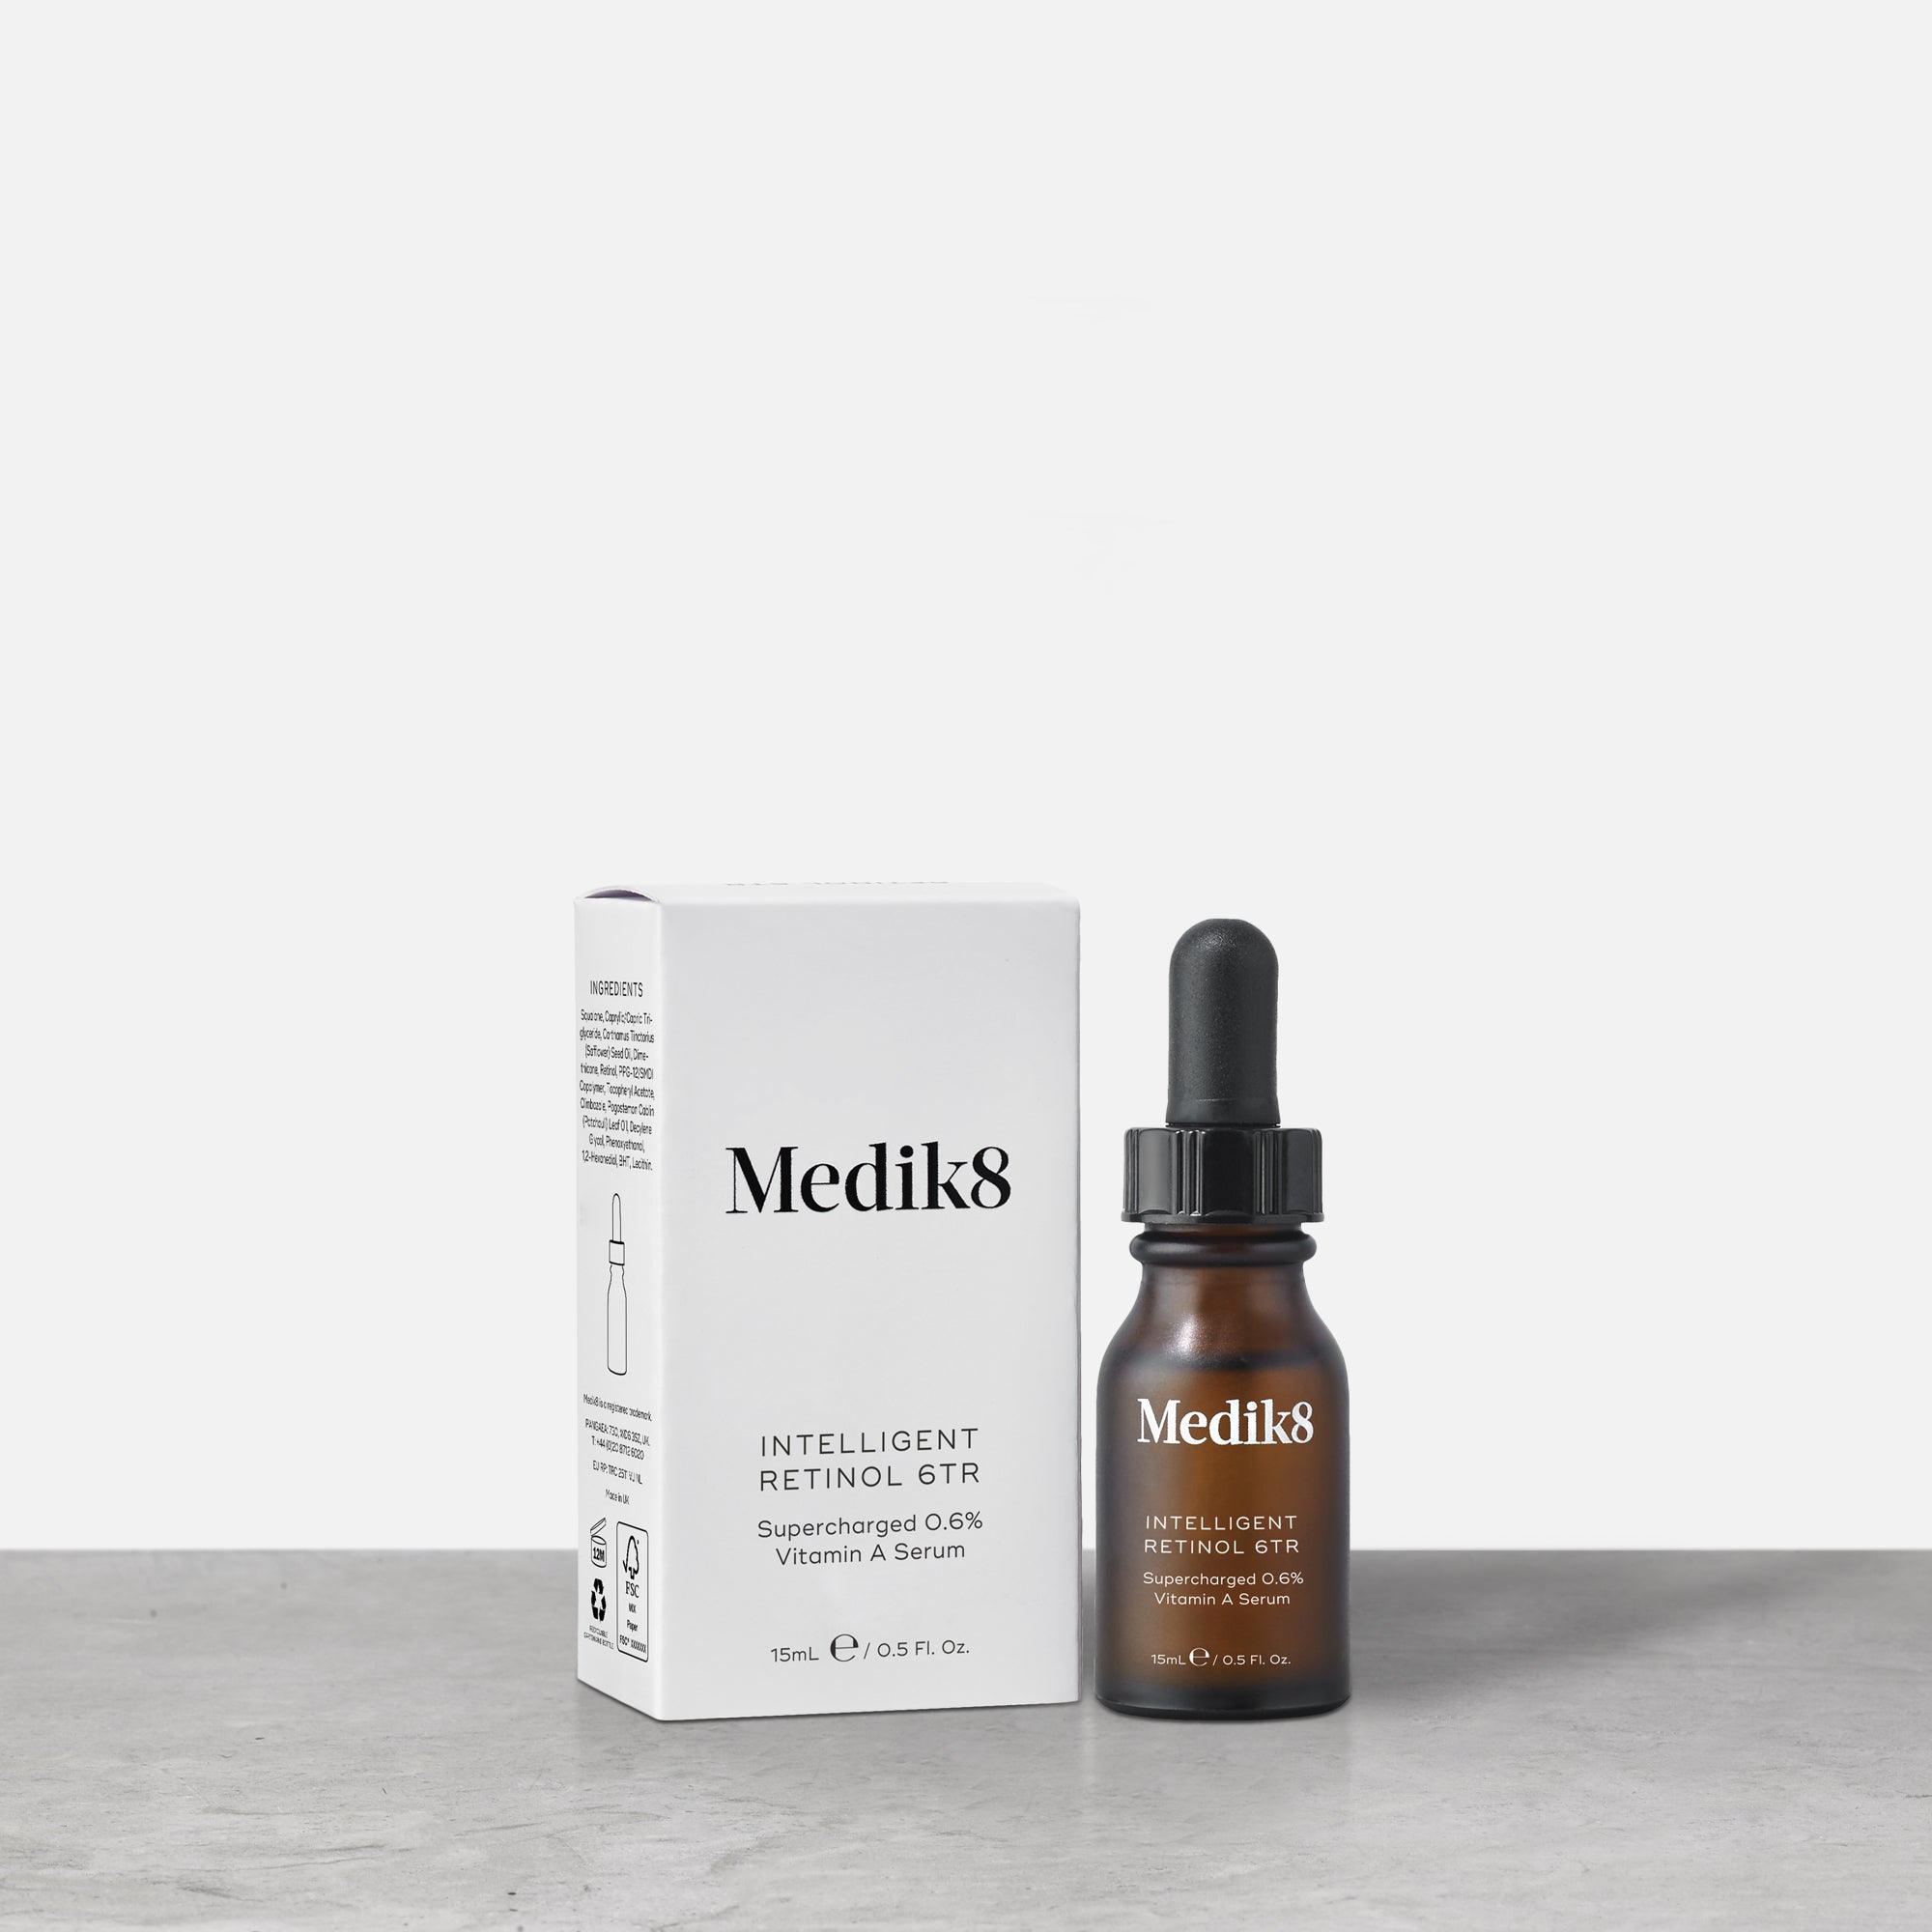 Intelligent Retinol 6TR™ by Medik8. A Supercharged 0.6% Vitamin A Serum